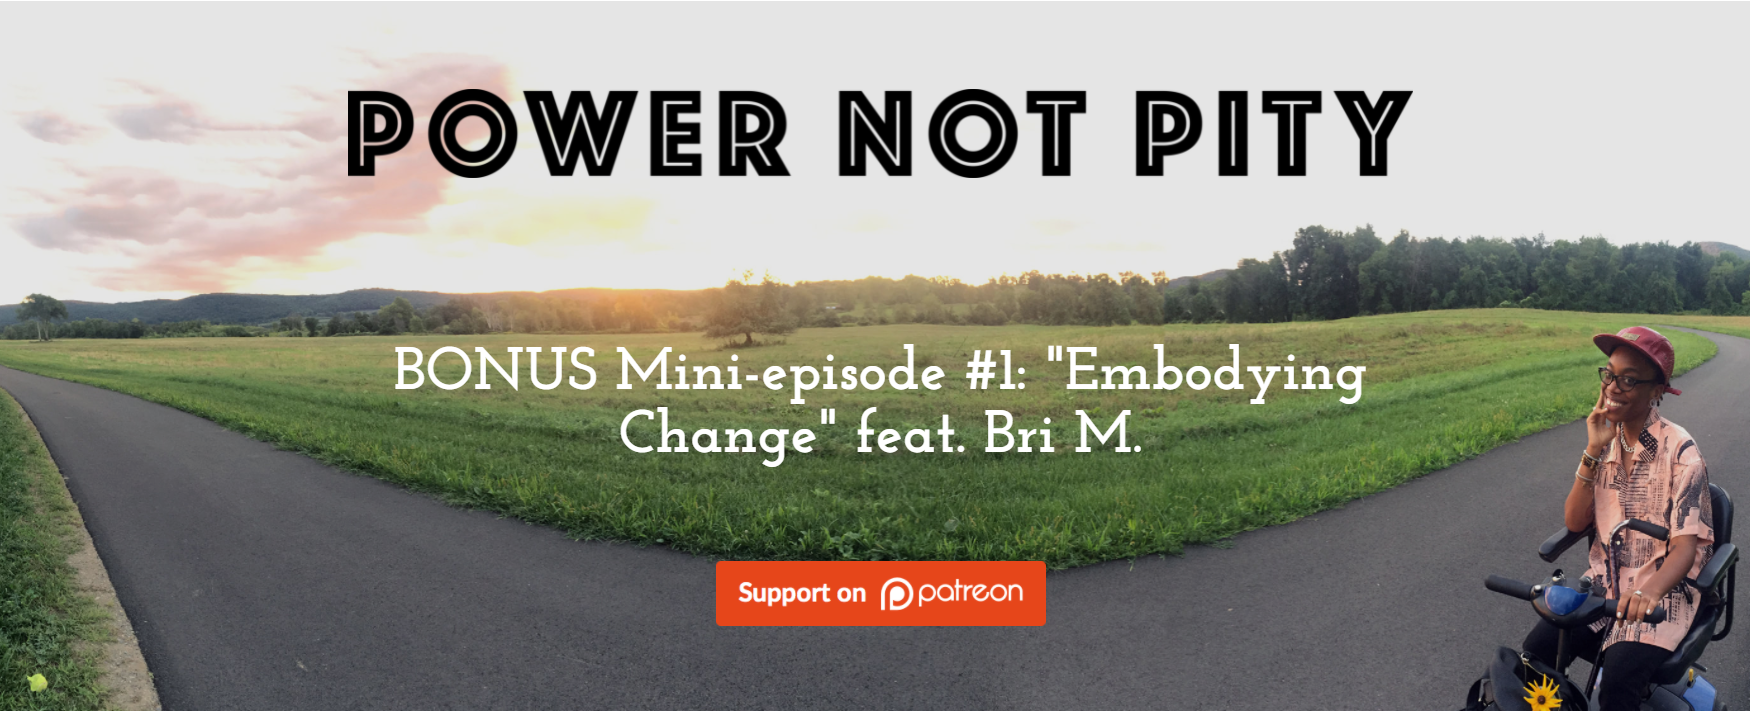 Power not Pity website screenshot that reads Power Not Pity, BONUS Mini-episode #1 'Embodying Change' feat. Bri M.